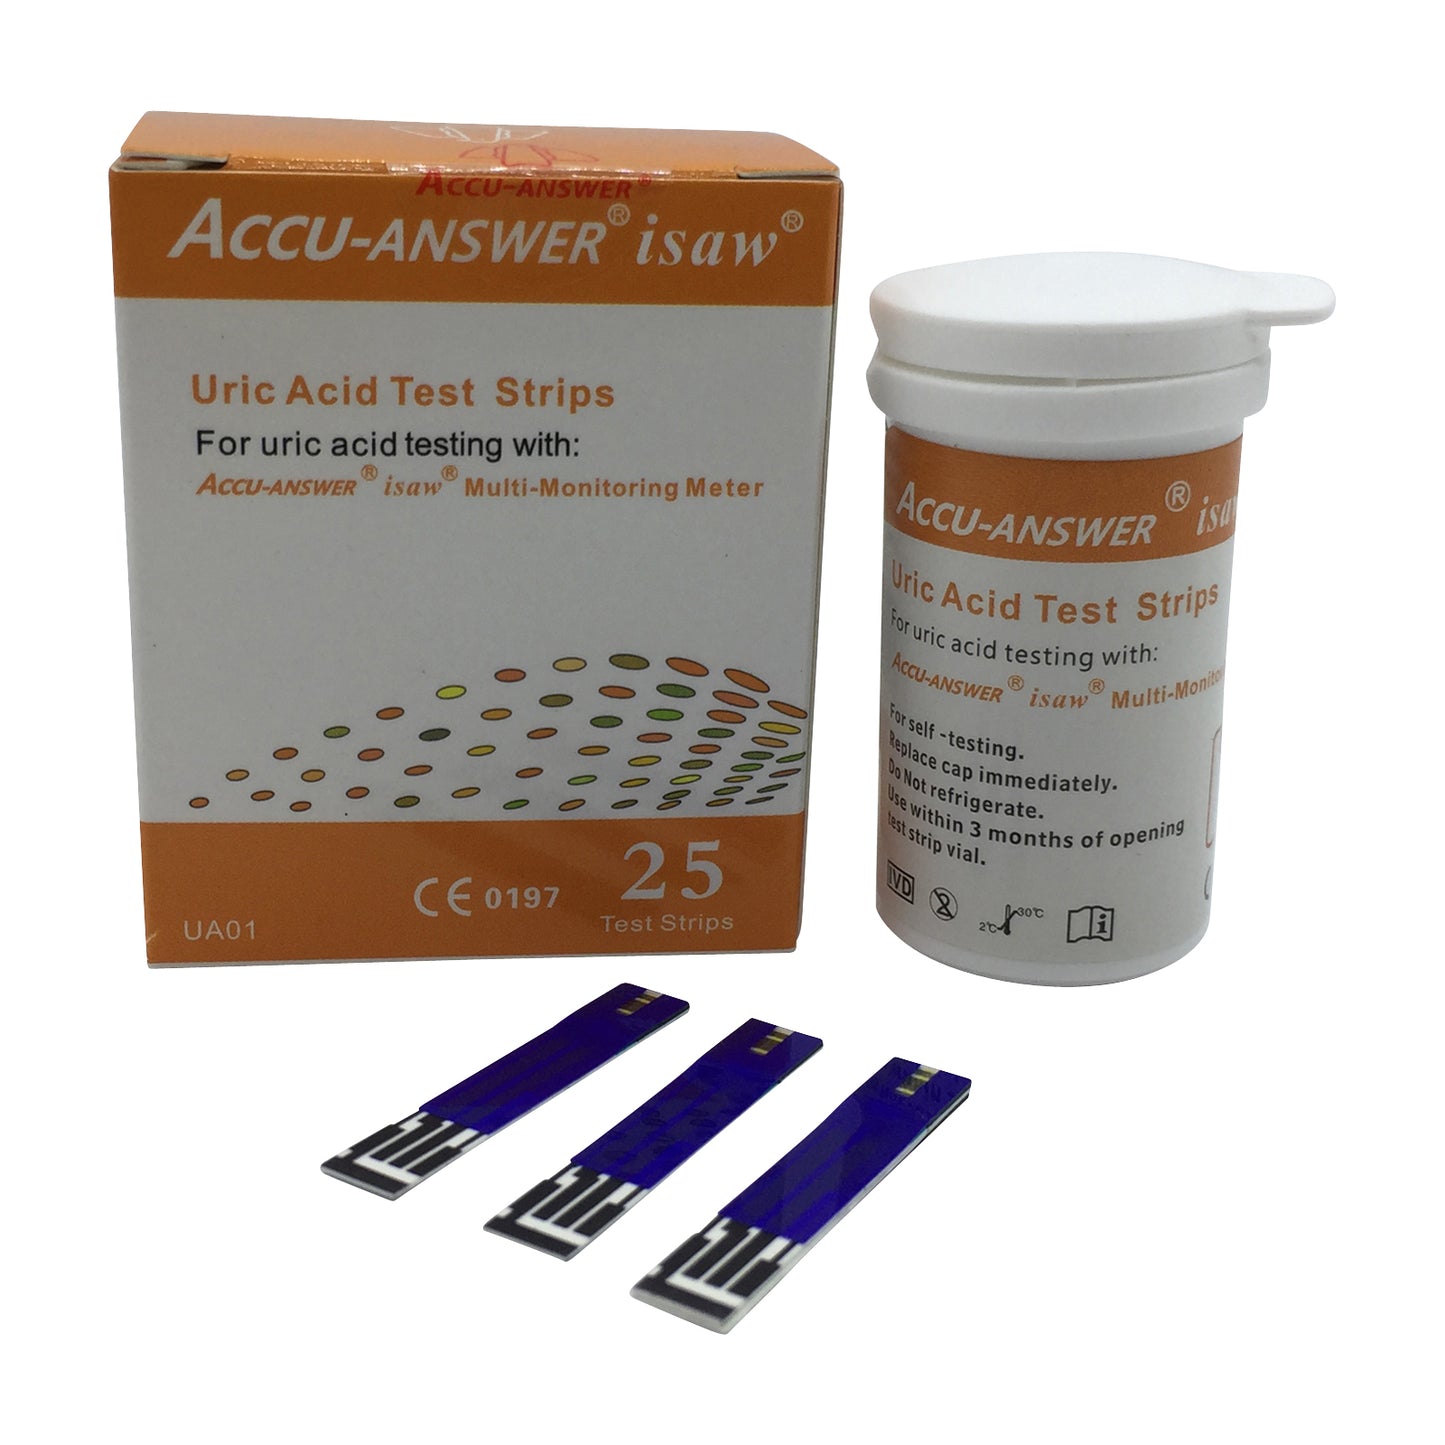 URIT 50 Uric Acid Test Strips (Test Strips Only) for URIT (Model: PA-11)  Uric Acid Monitor. 2 Boxes Total 25 Test Strips Per Box. (Includes 50 Test  Strips and 50 lancets.)